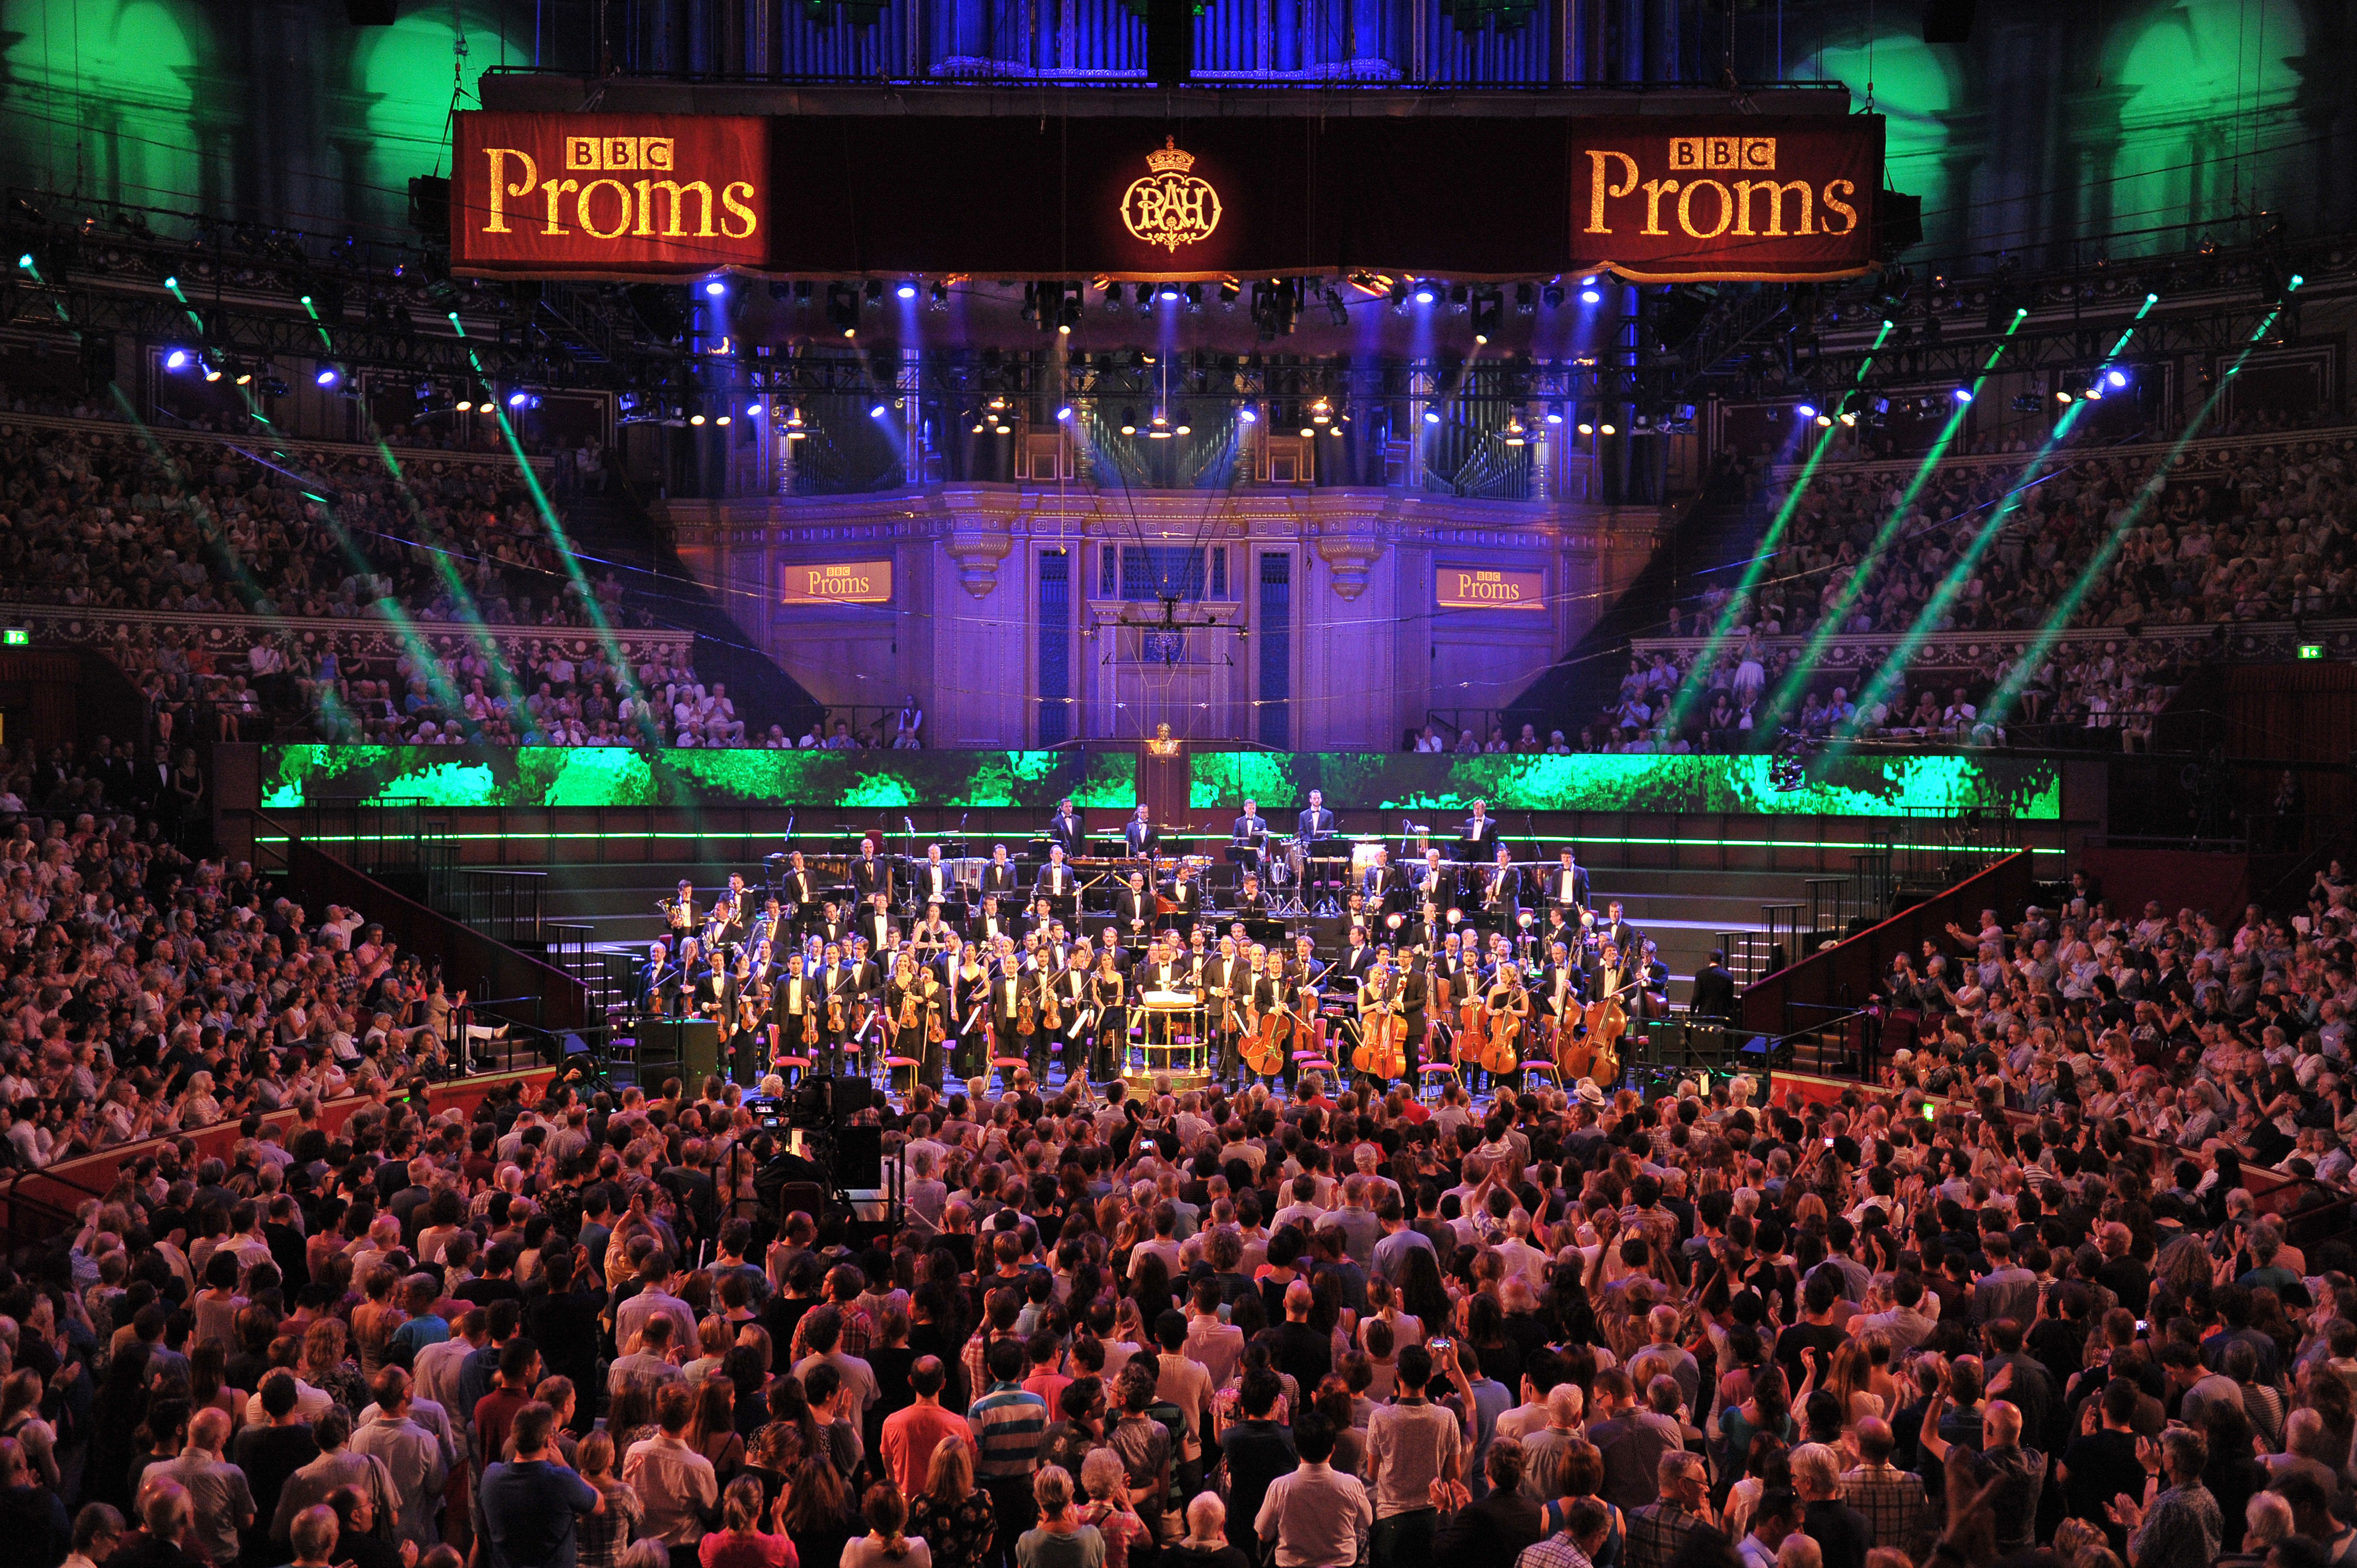 BBC Proms 2016 - Gershwin Gala with the John Wilson Orchestra